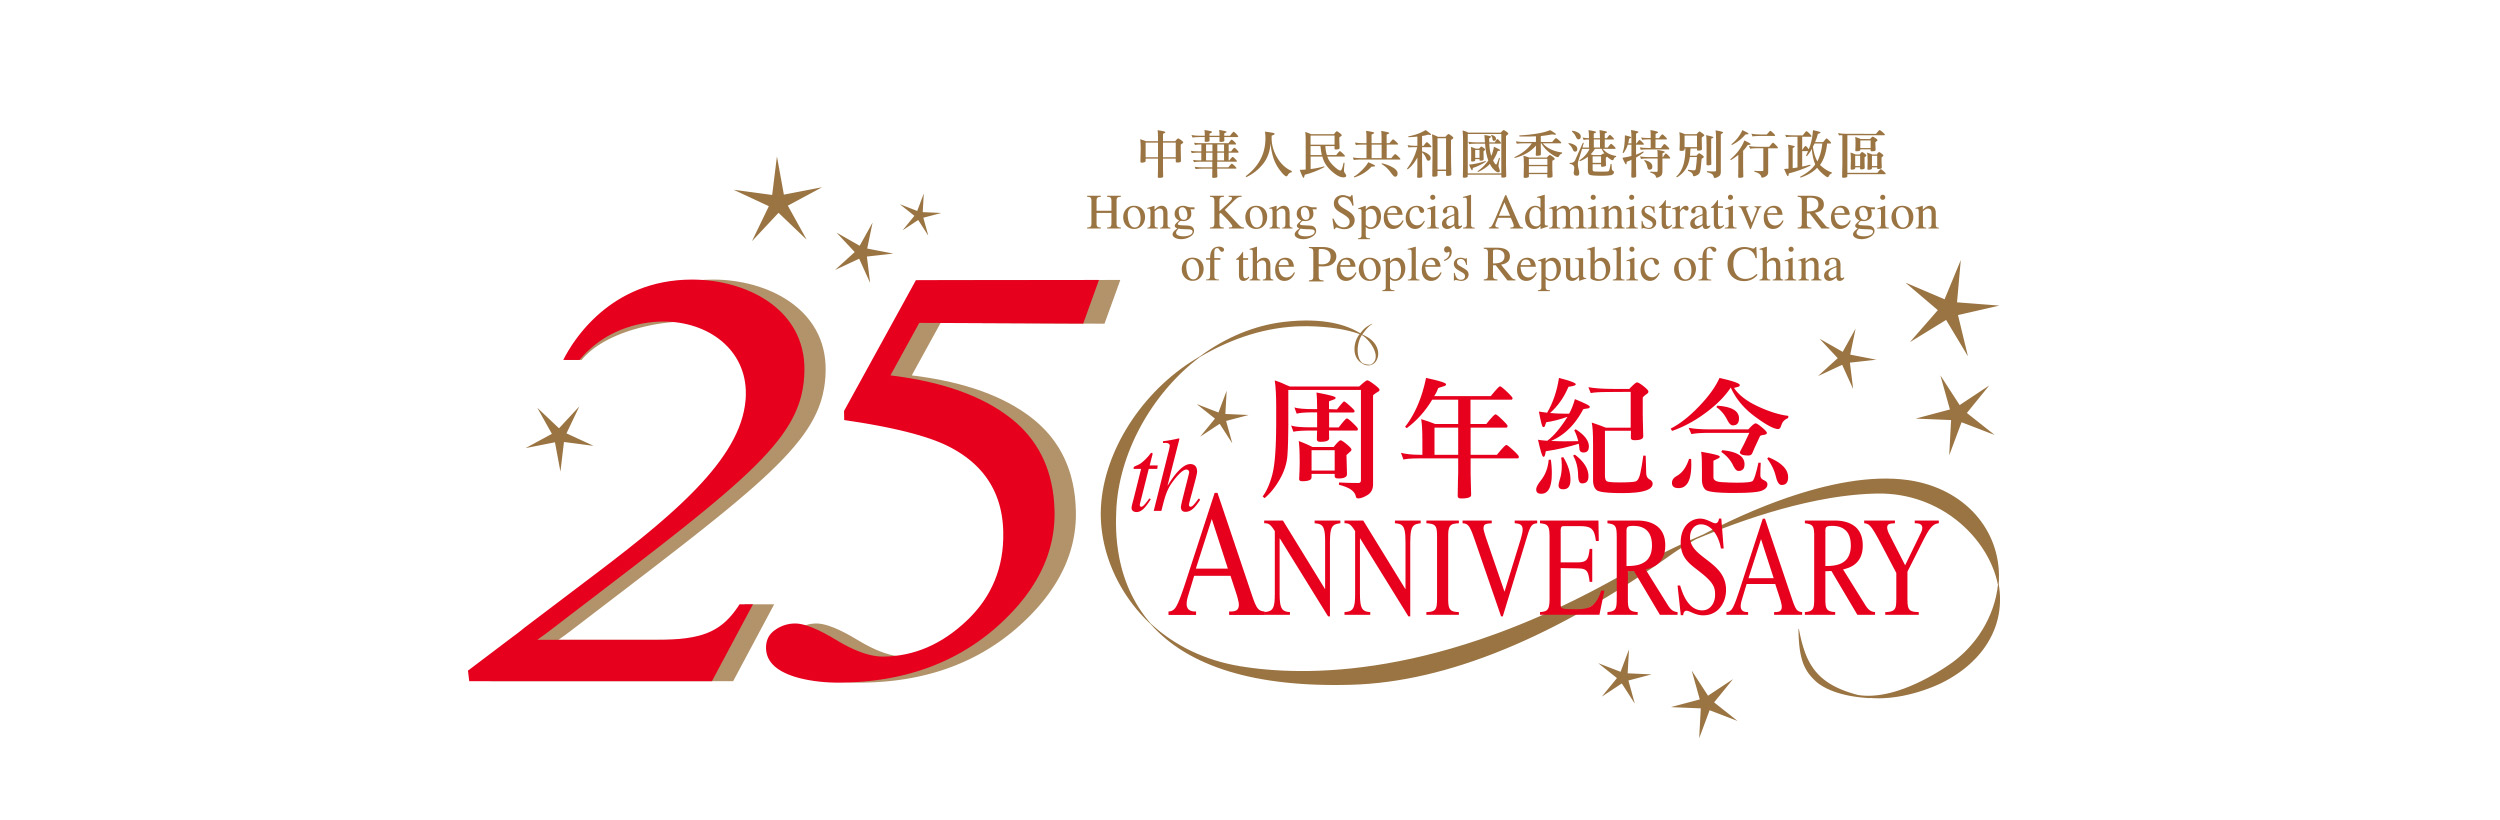 HKSAR 25th Anniversary Banner